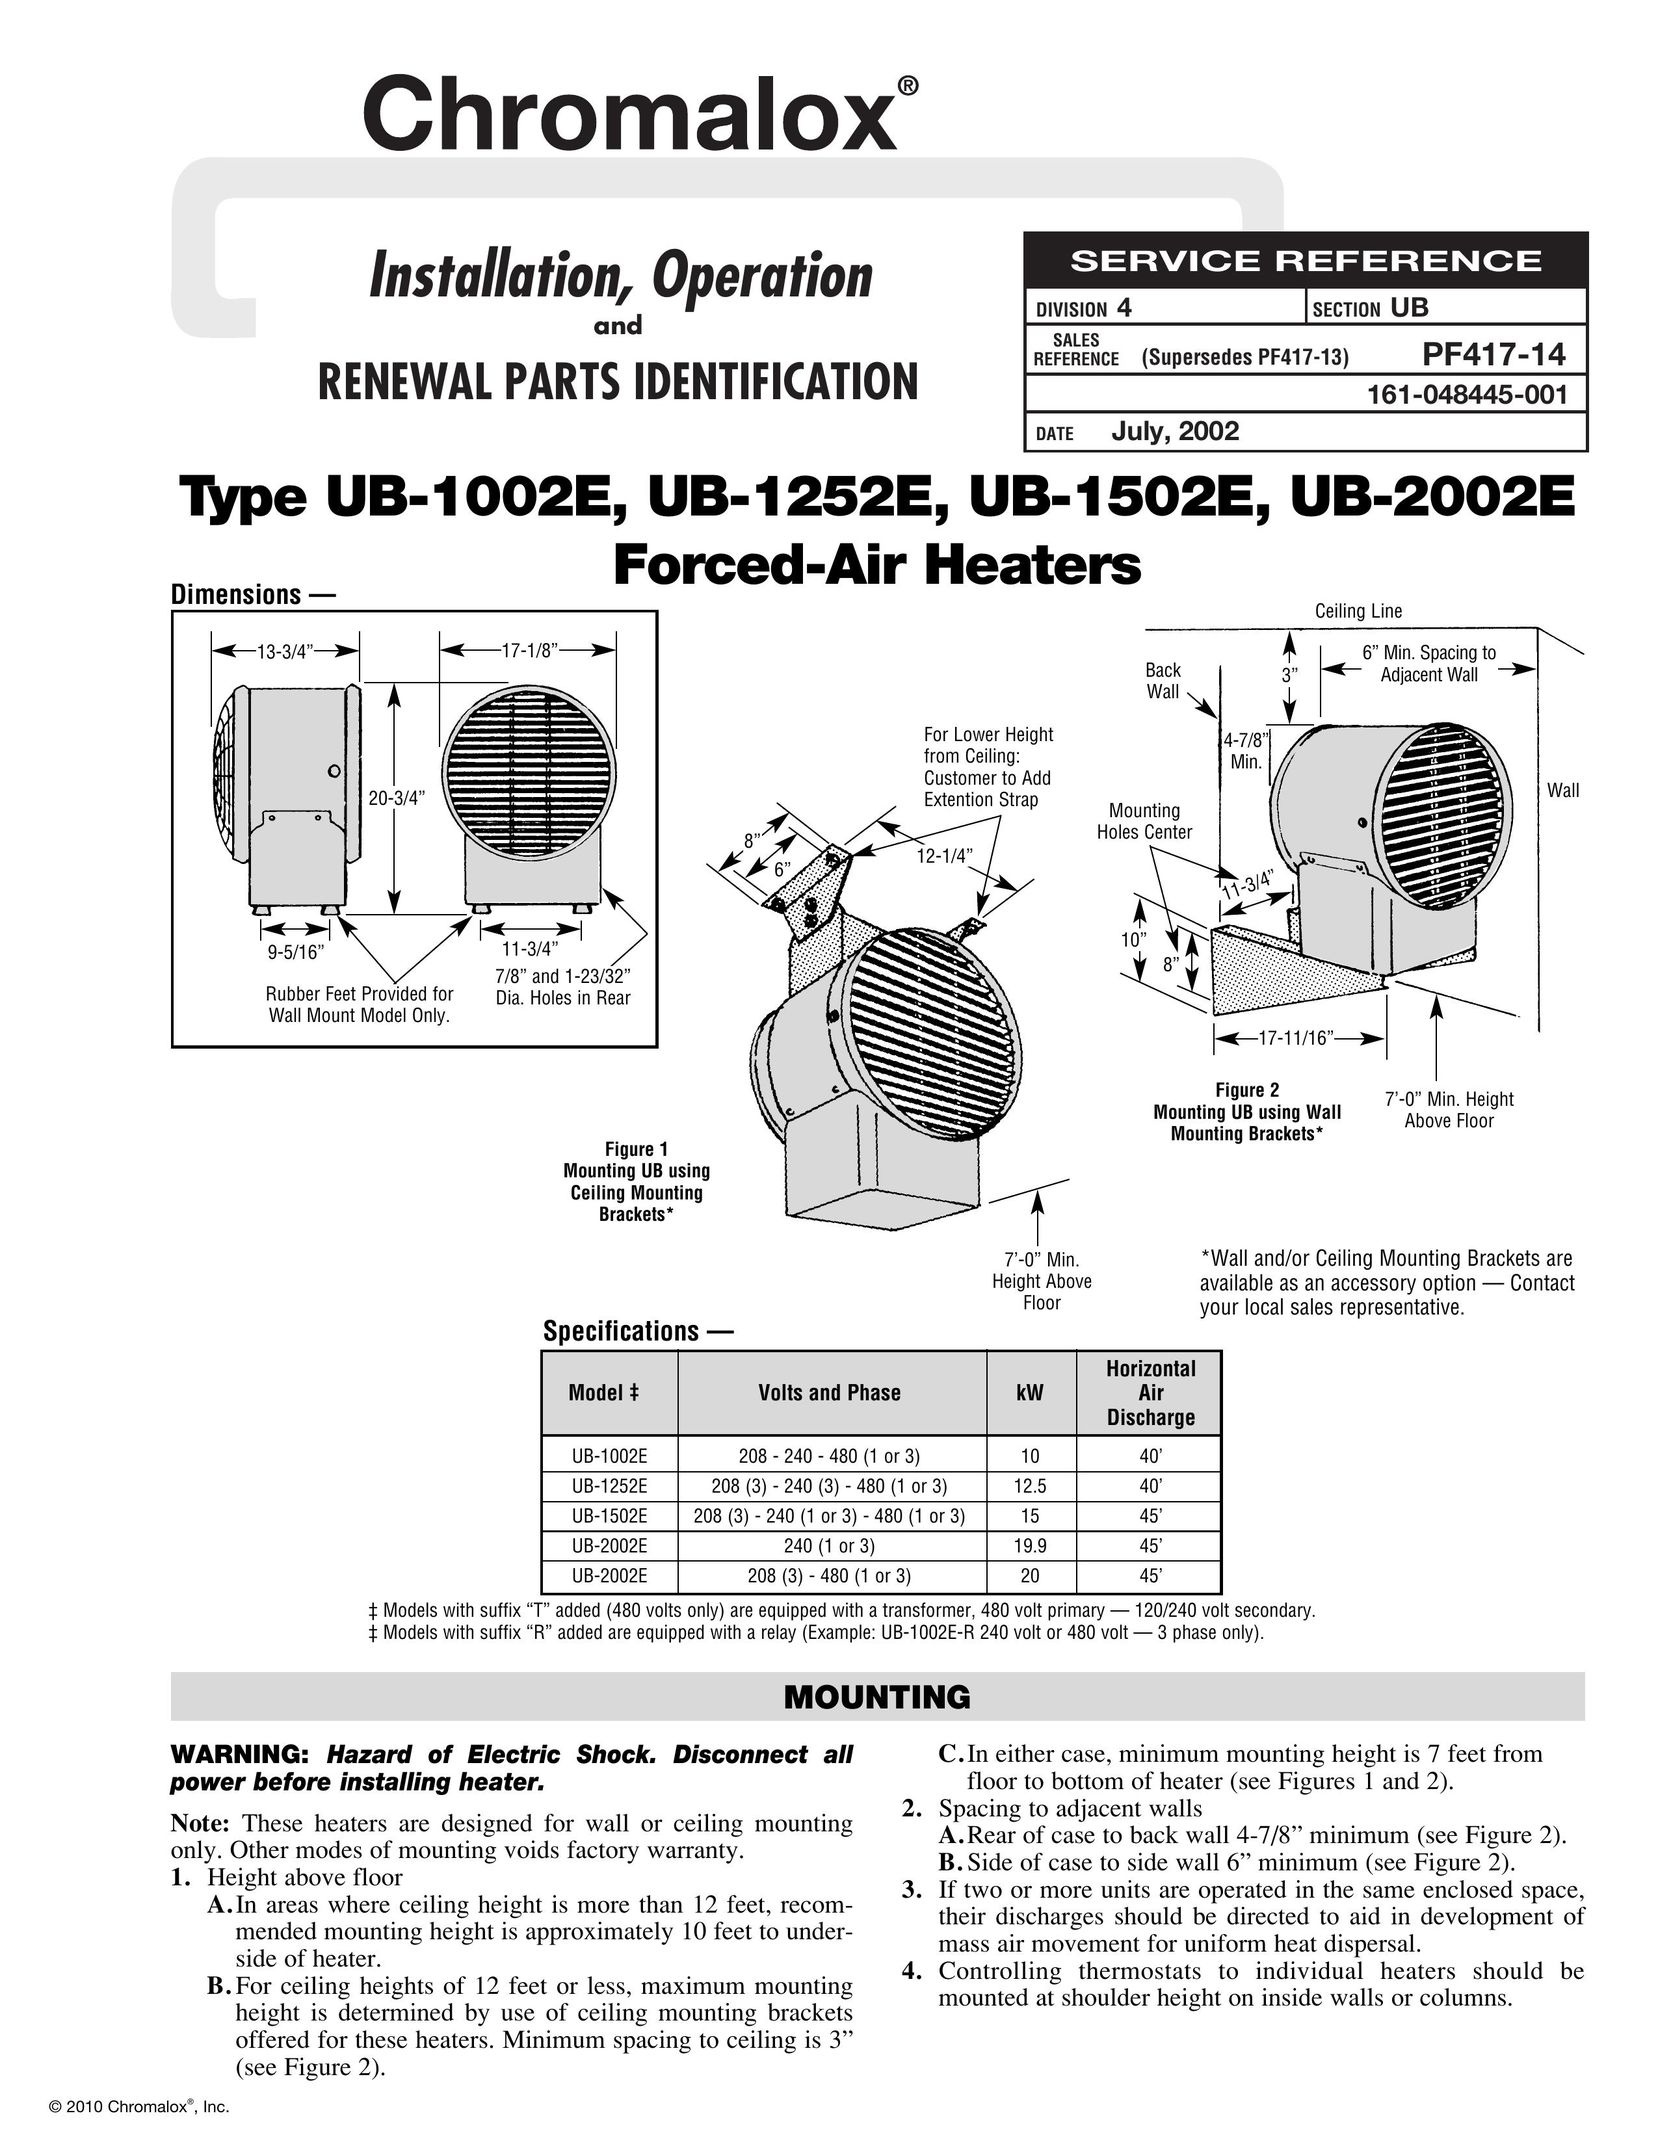 Chromalox UB-1502E Air Conditioner User Manual